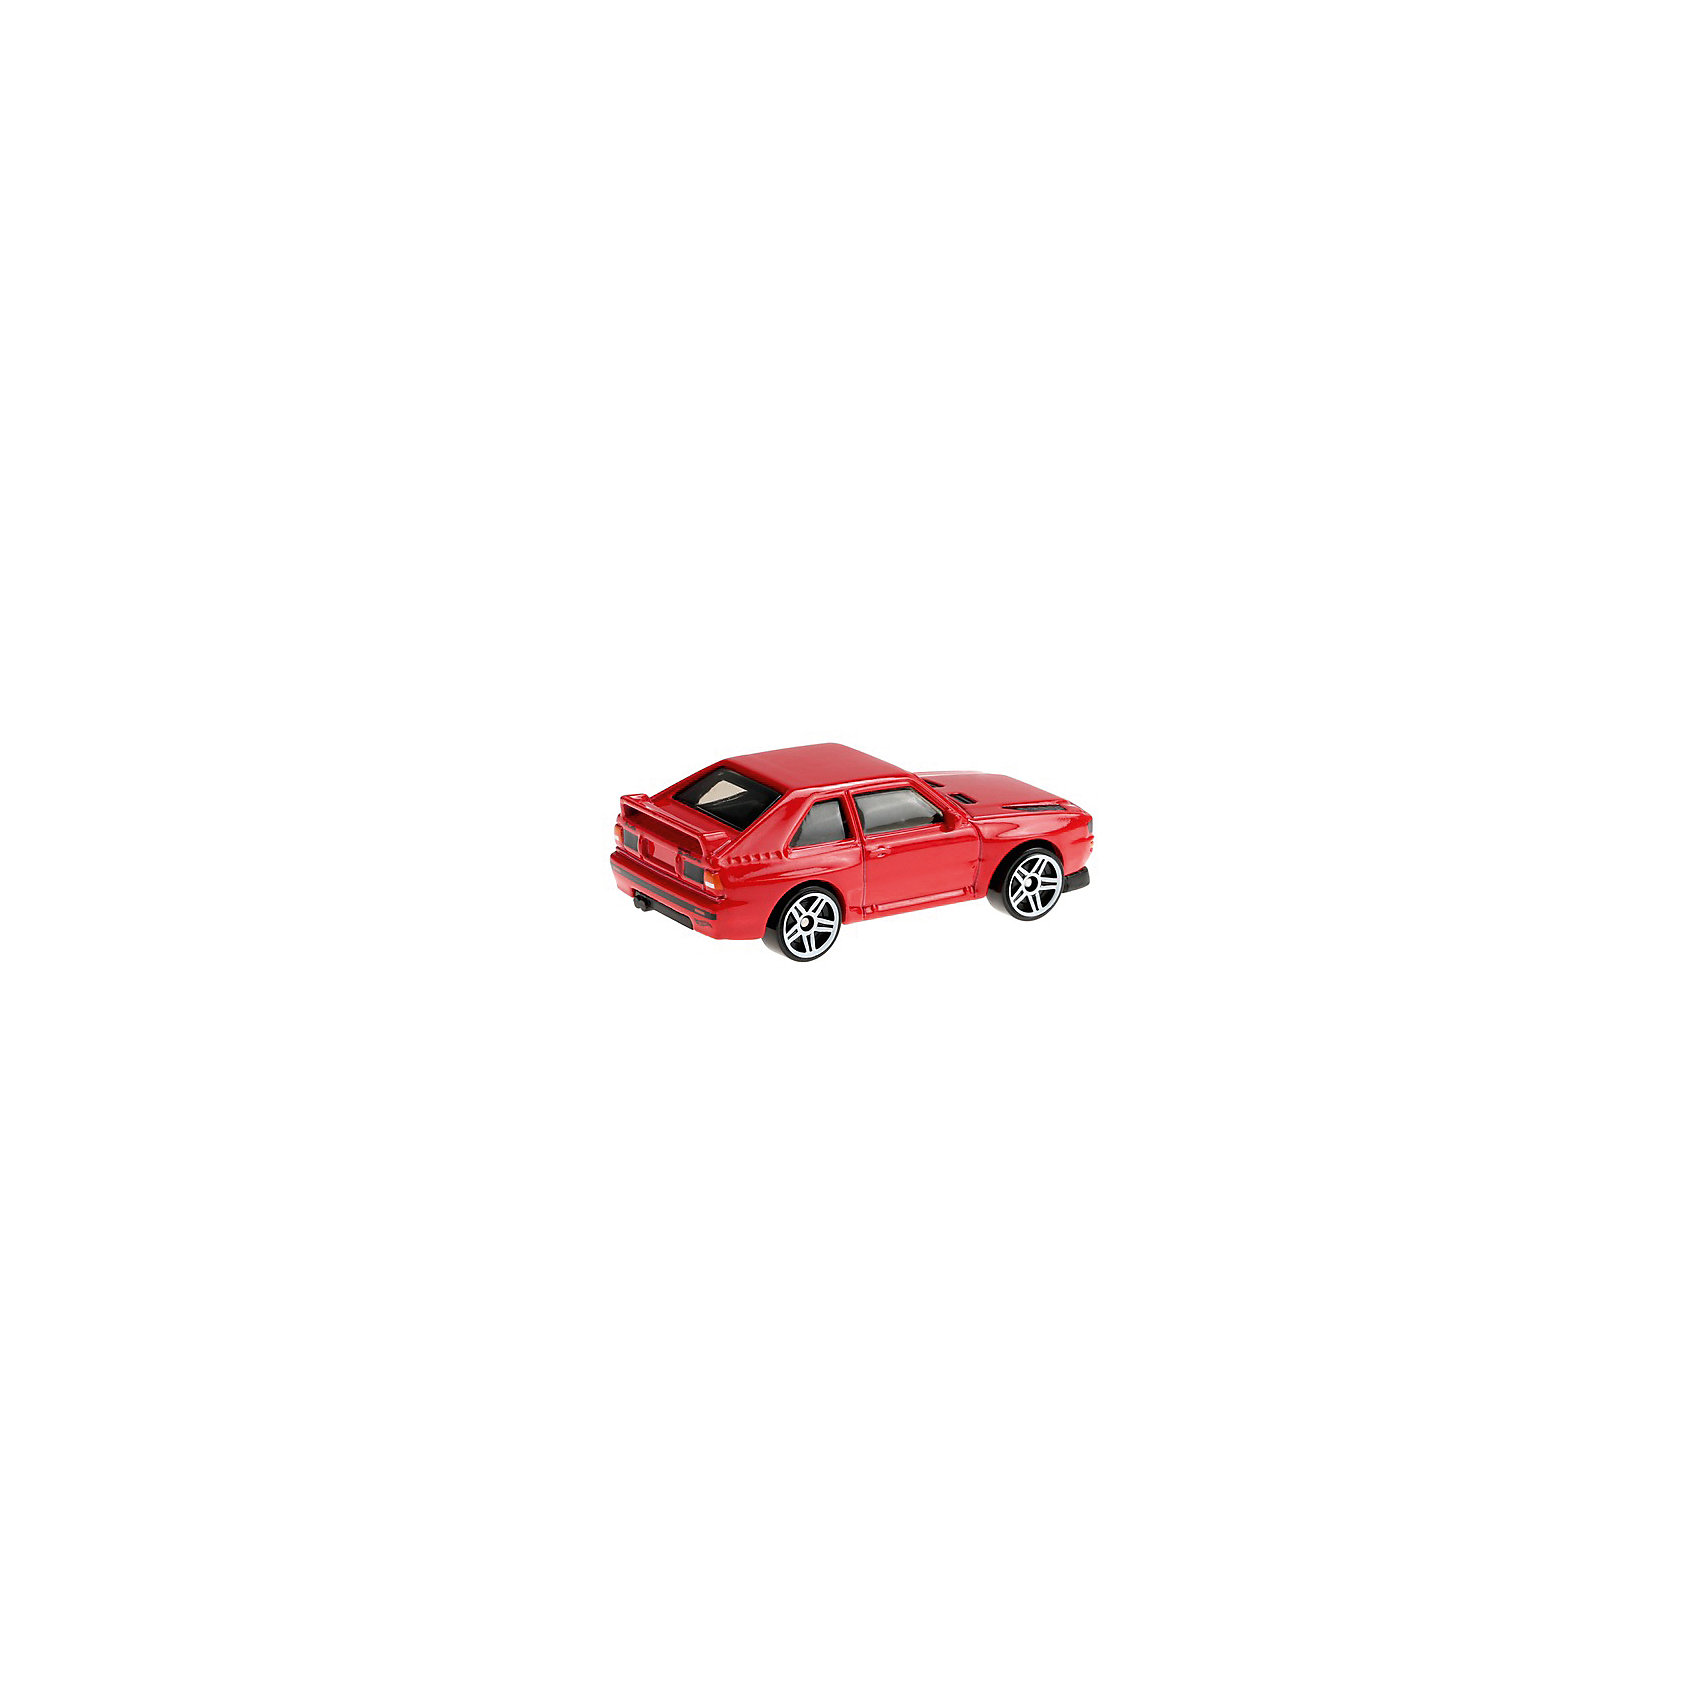 Базовая машинка Hot Wheels 84 Audi Sport Quattro Mattel 16467085